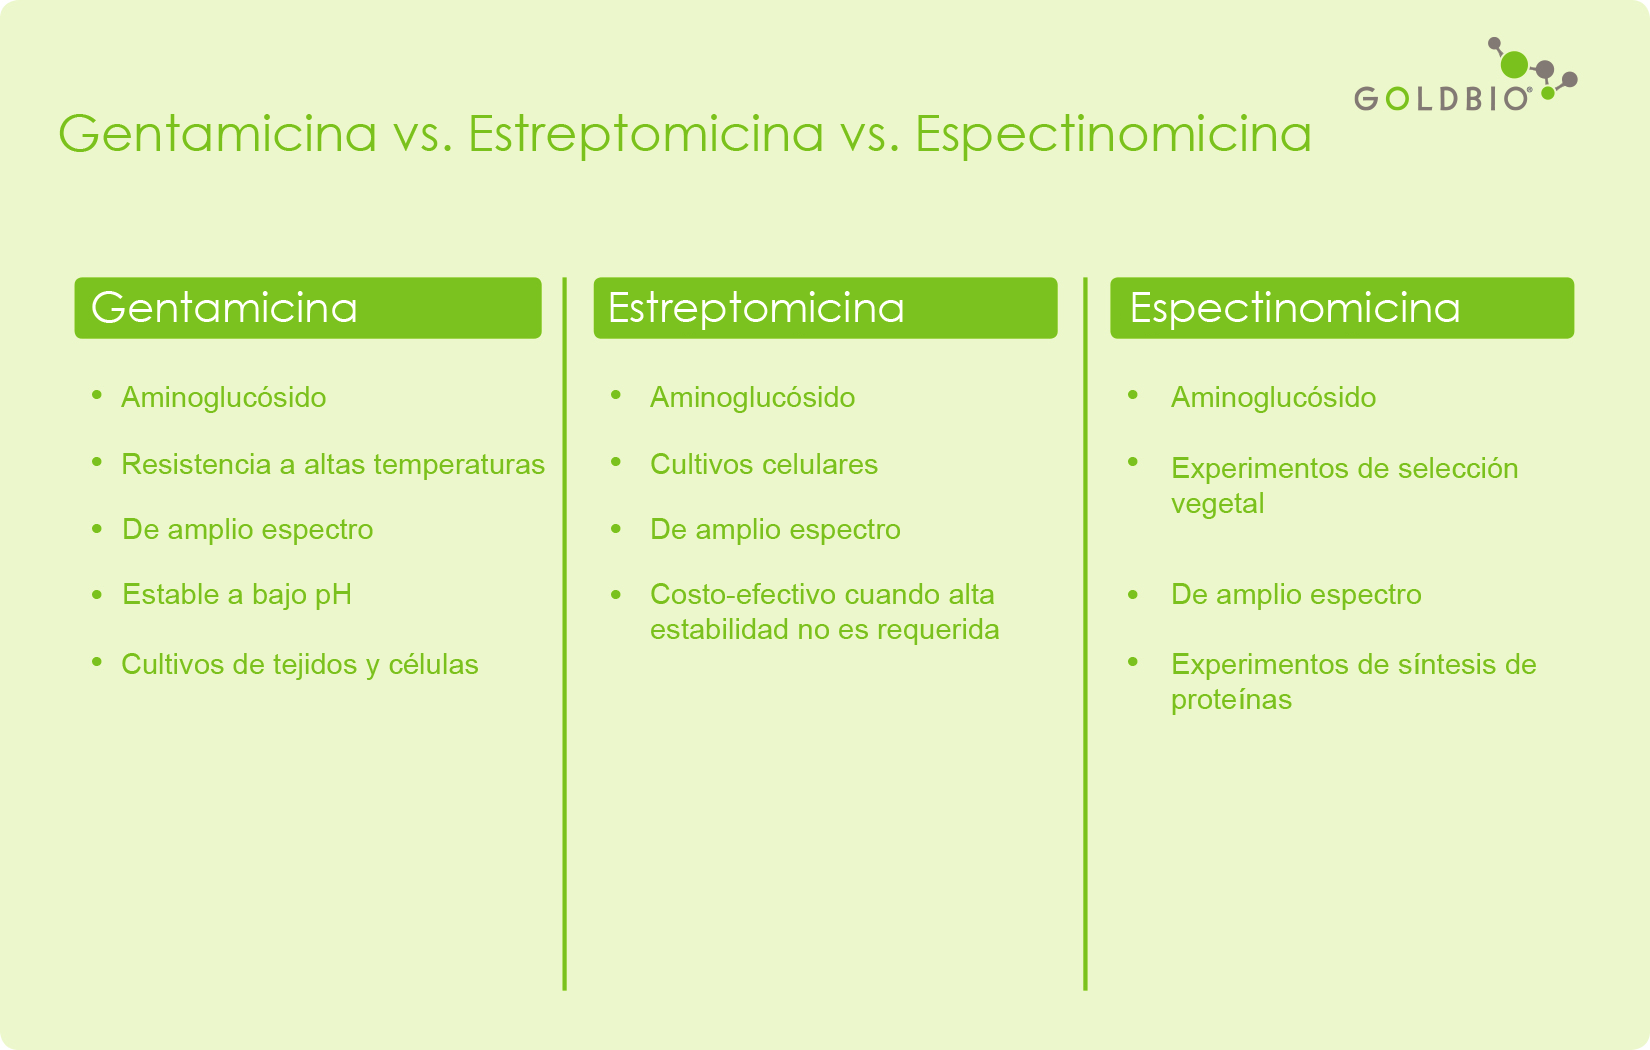 Gentamicina vs. estreptomicina vs. espectinomicina